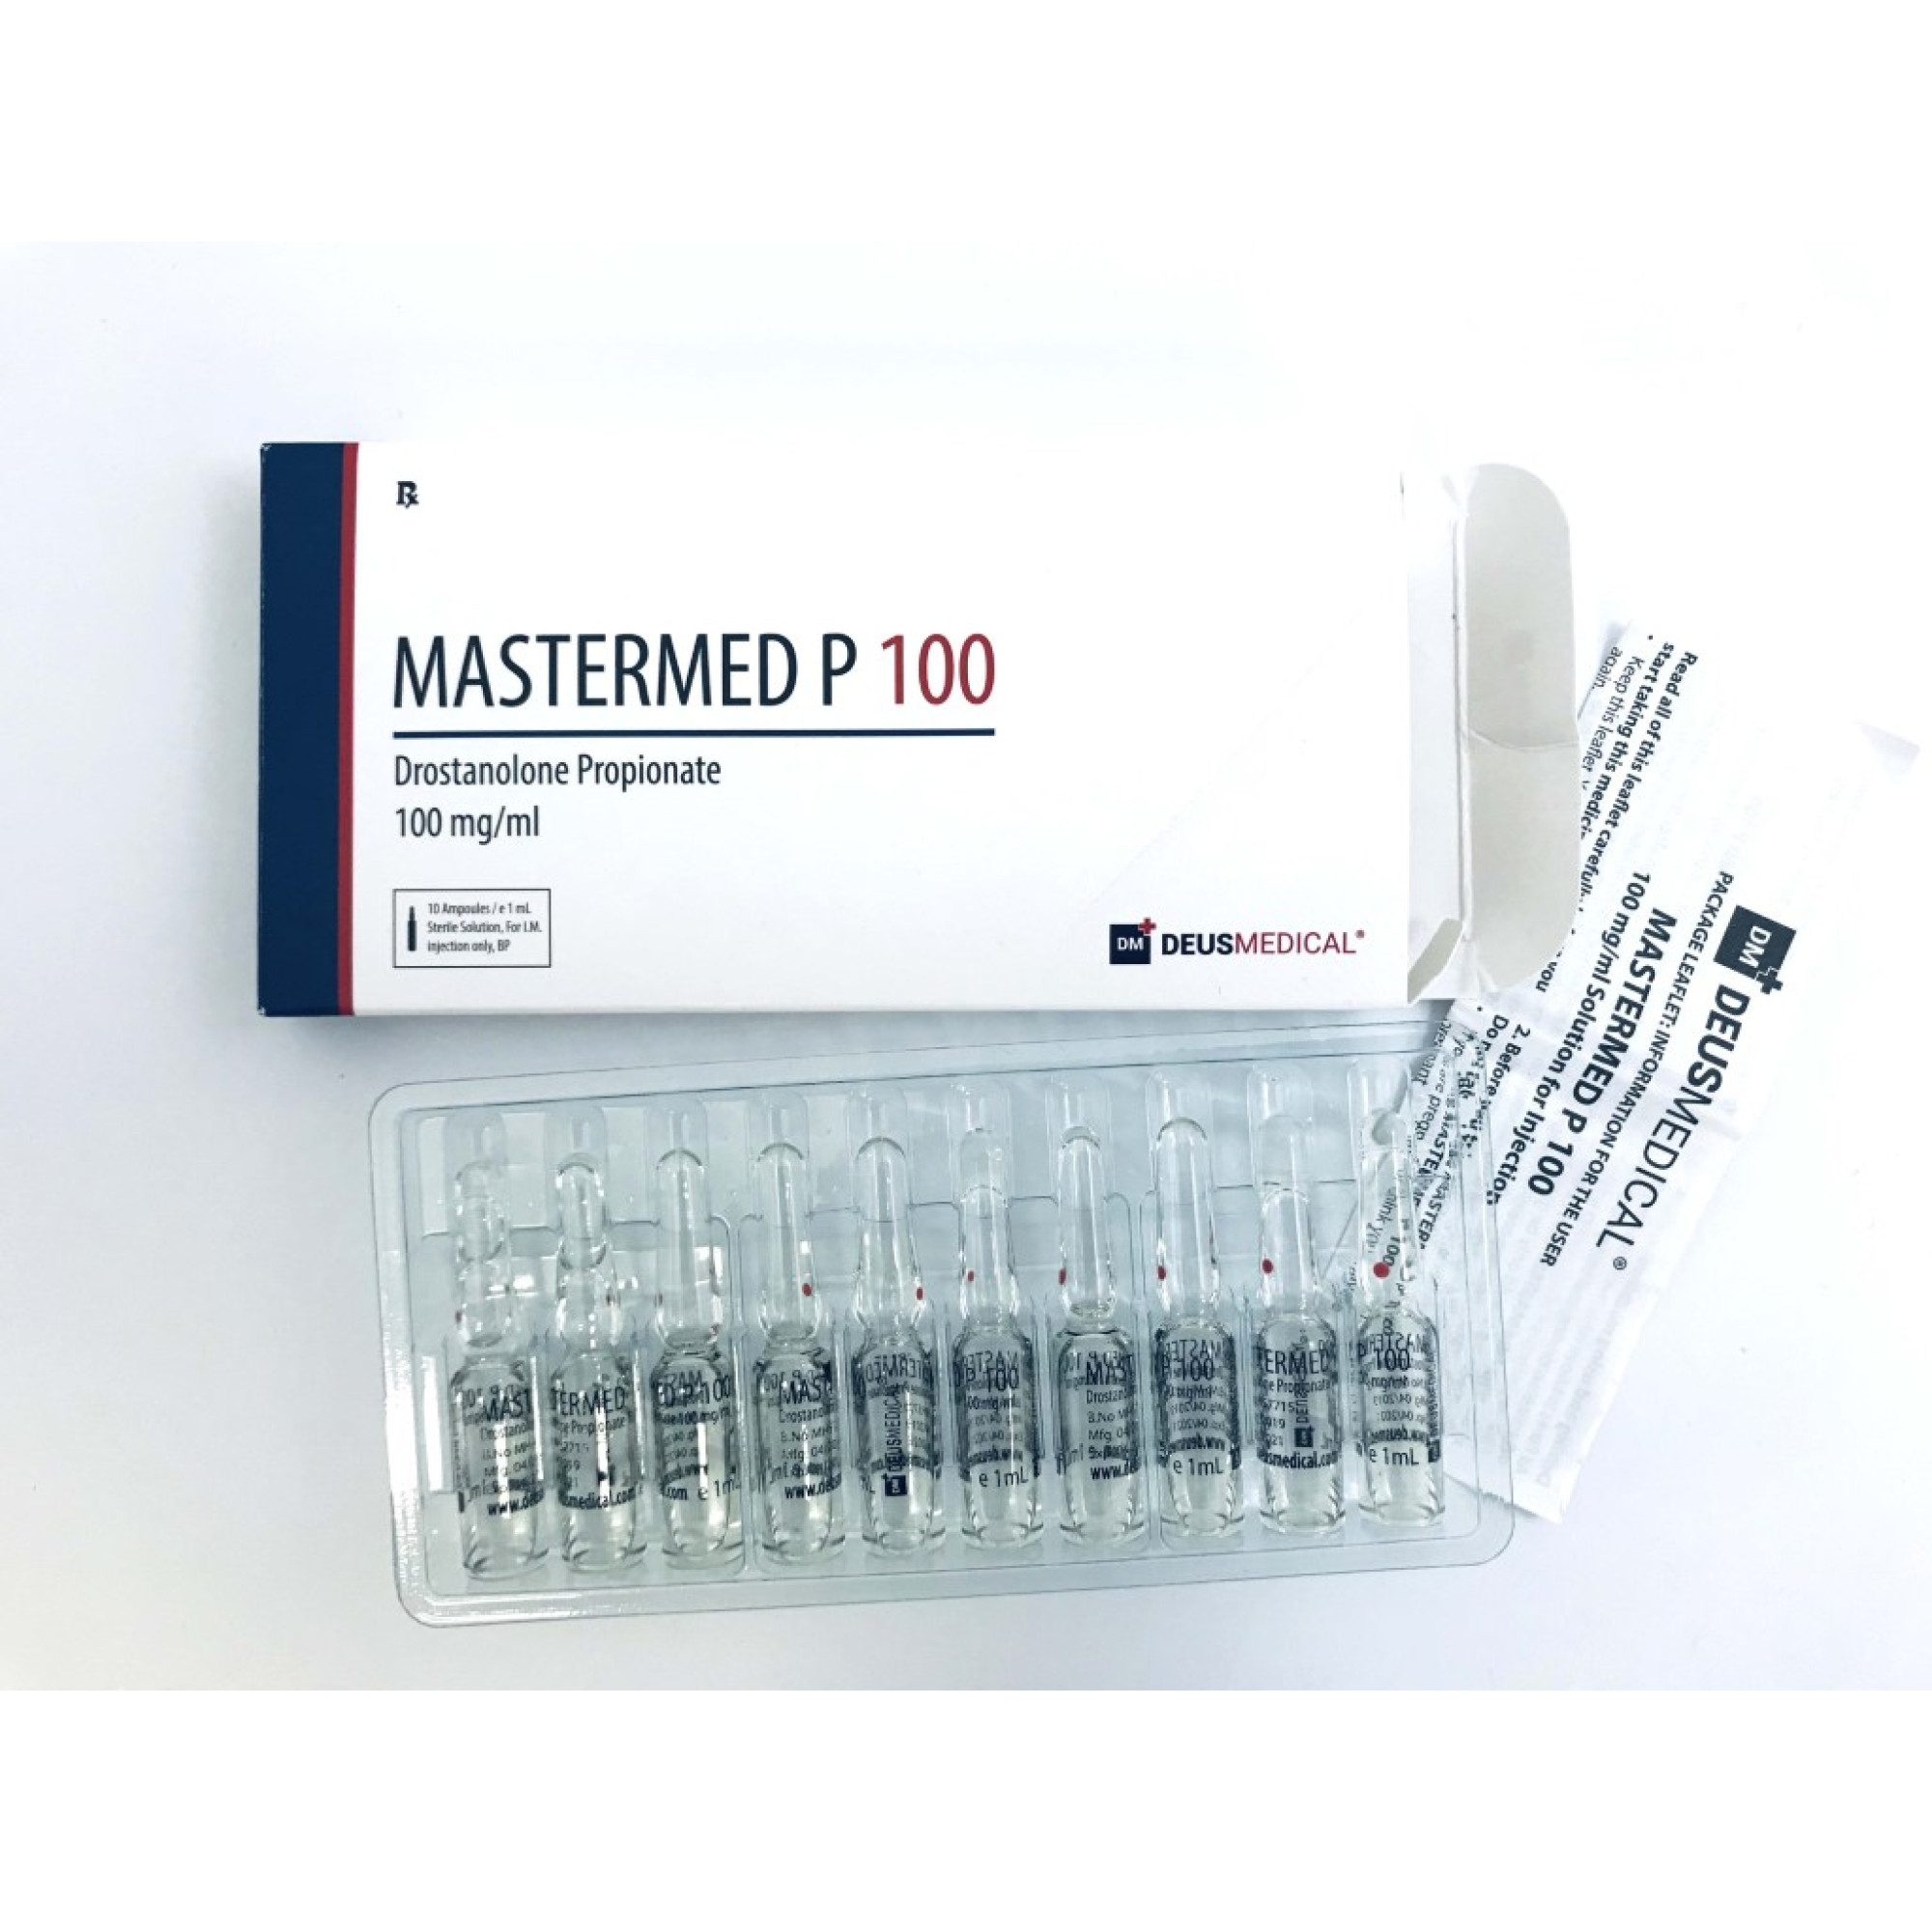 MASTERMED P 100 (Drostanolone Propionate), DEUS MEDICAL, BUY STEROIDS ONLINE - www.DEUSPOWER.com